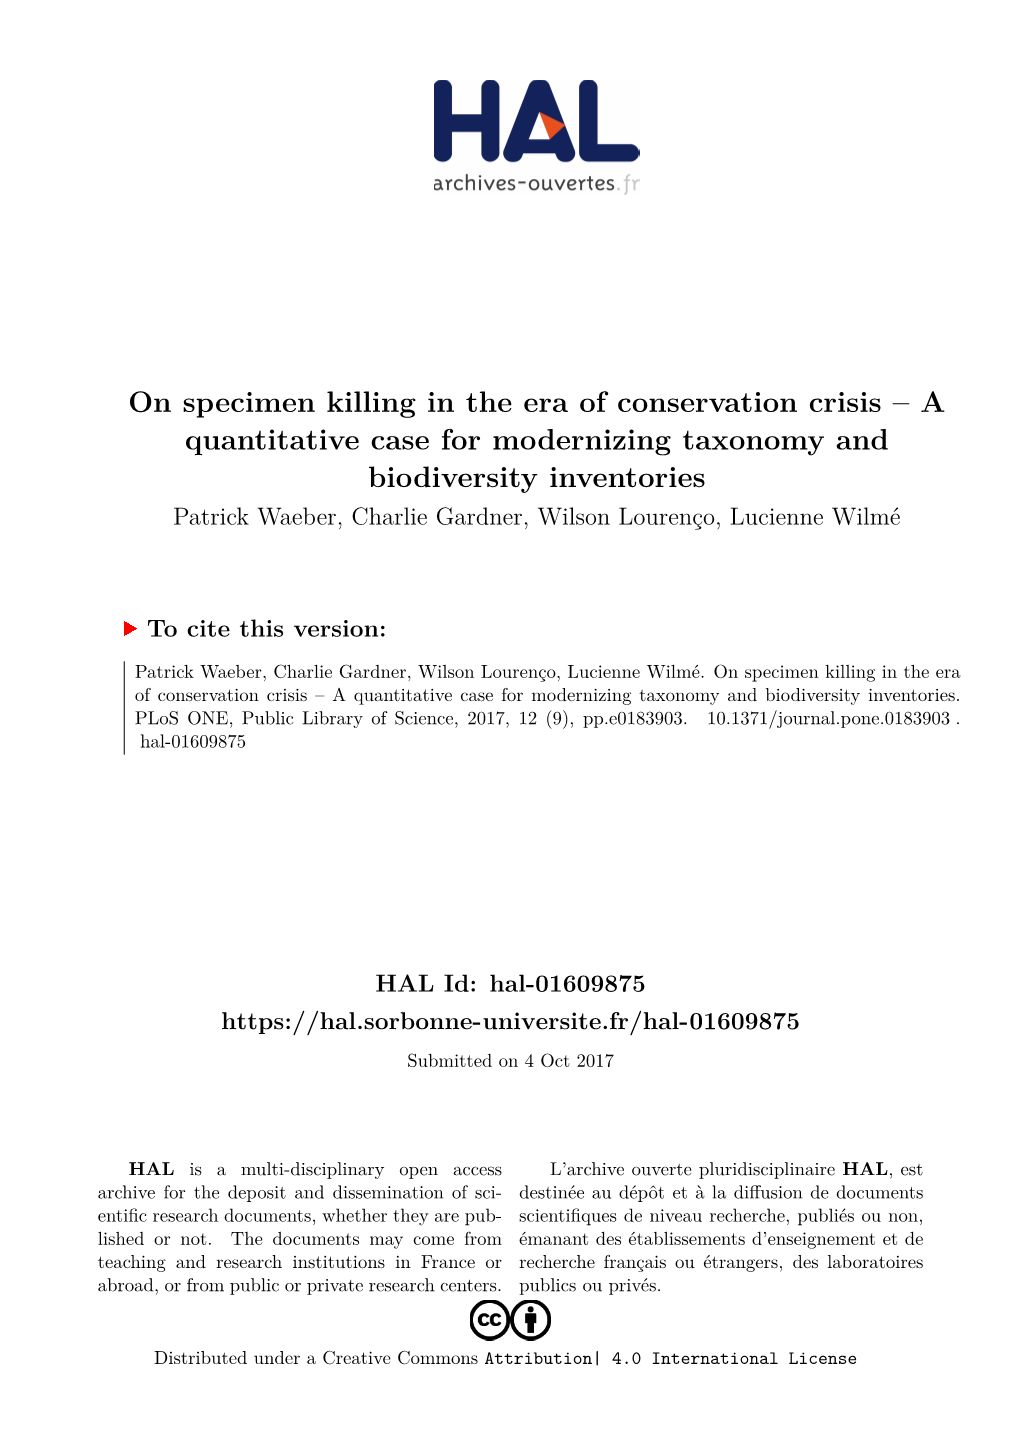 On Specimen Killing in the Era of Conservation Crisis